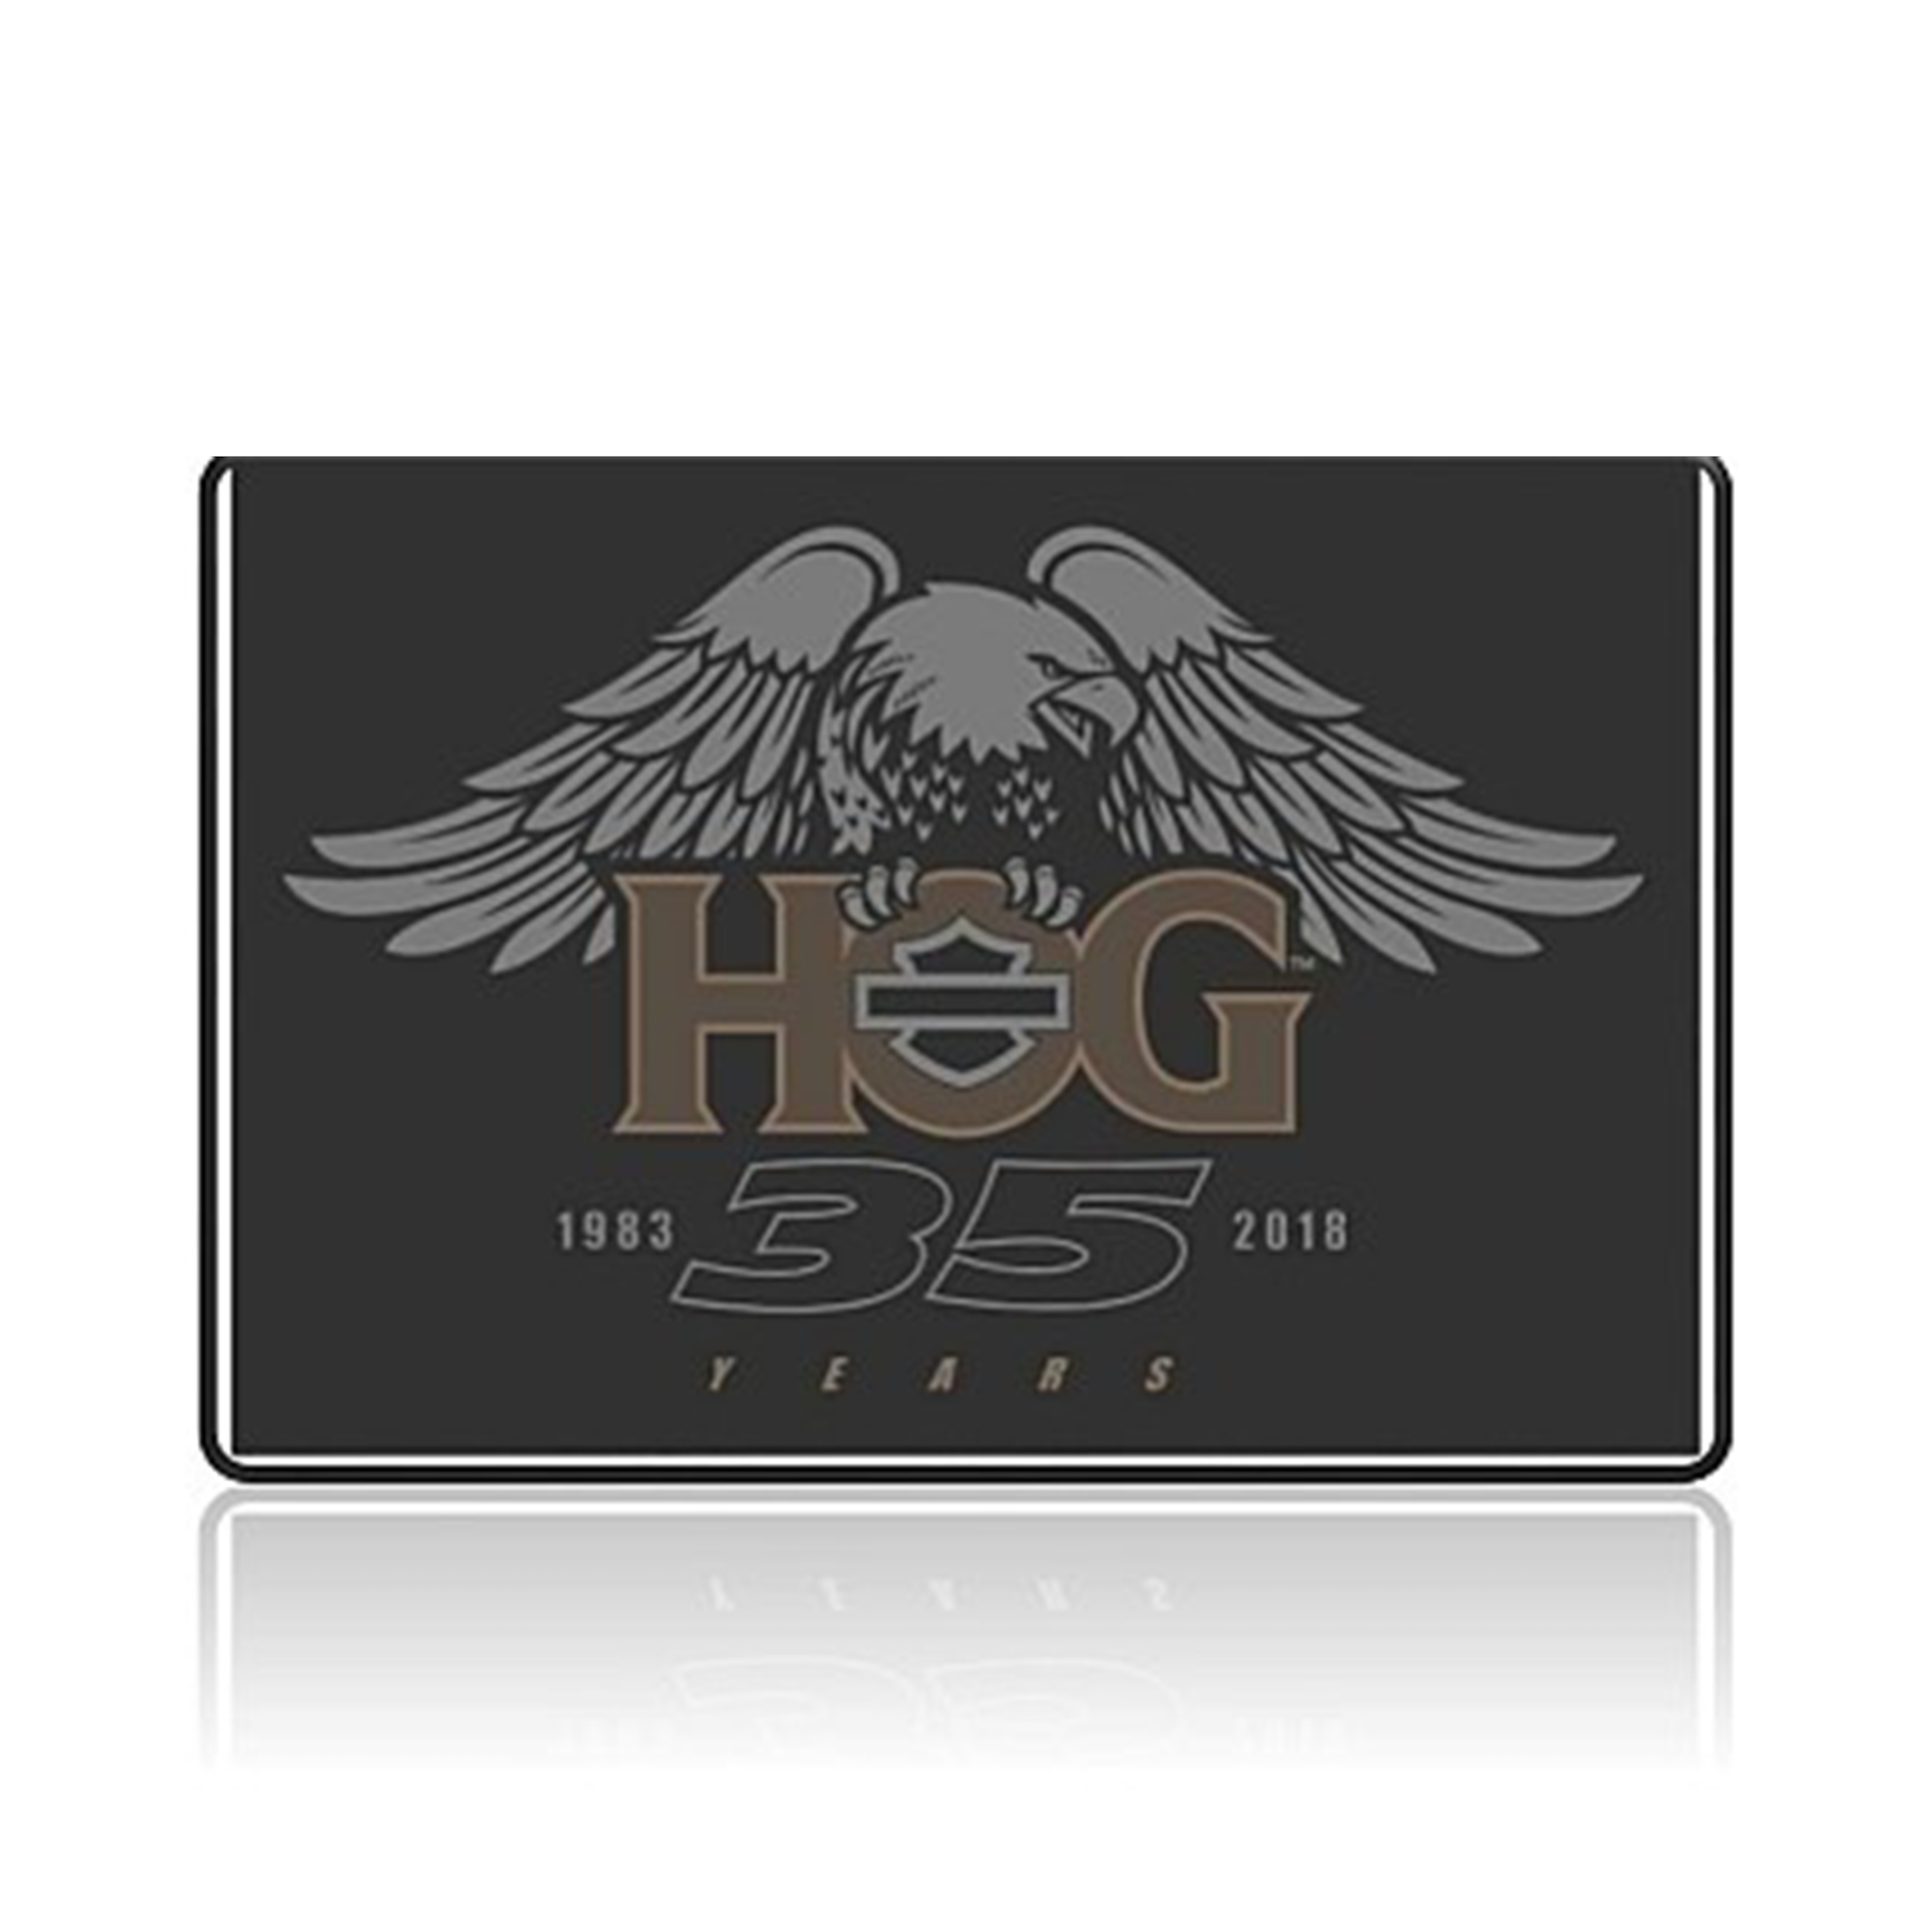 H.O.G. 35 Magnet